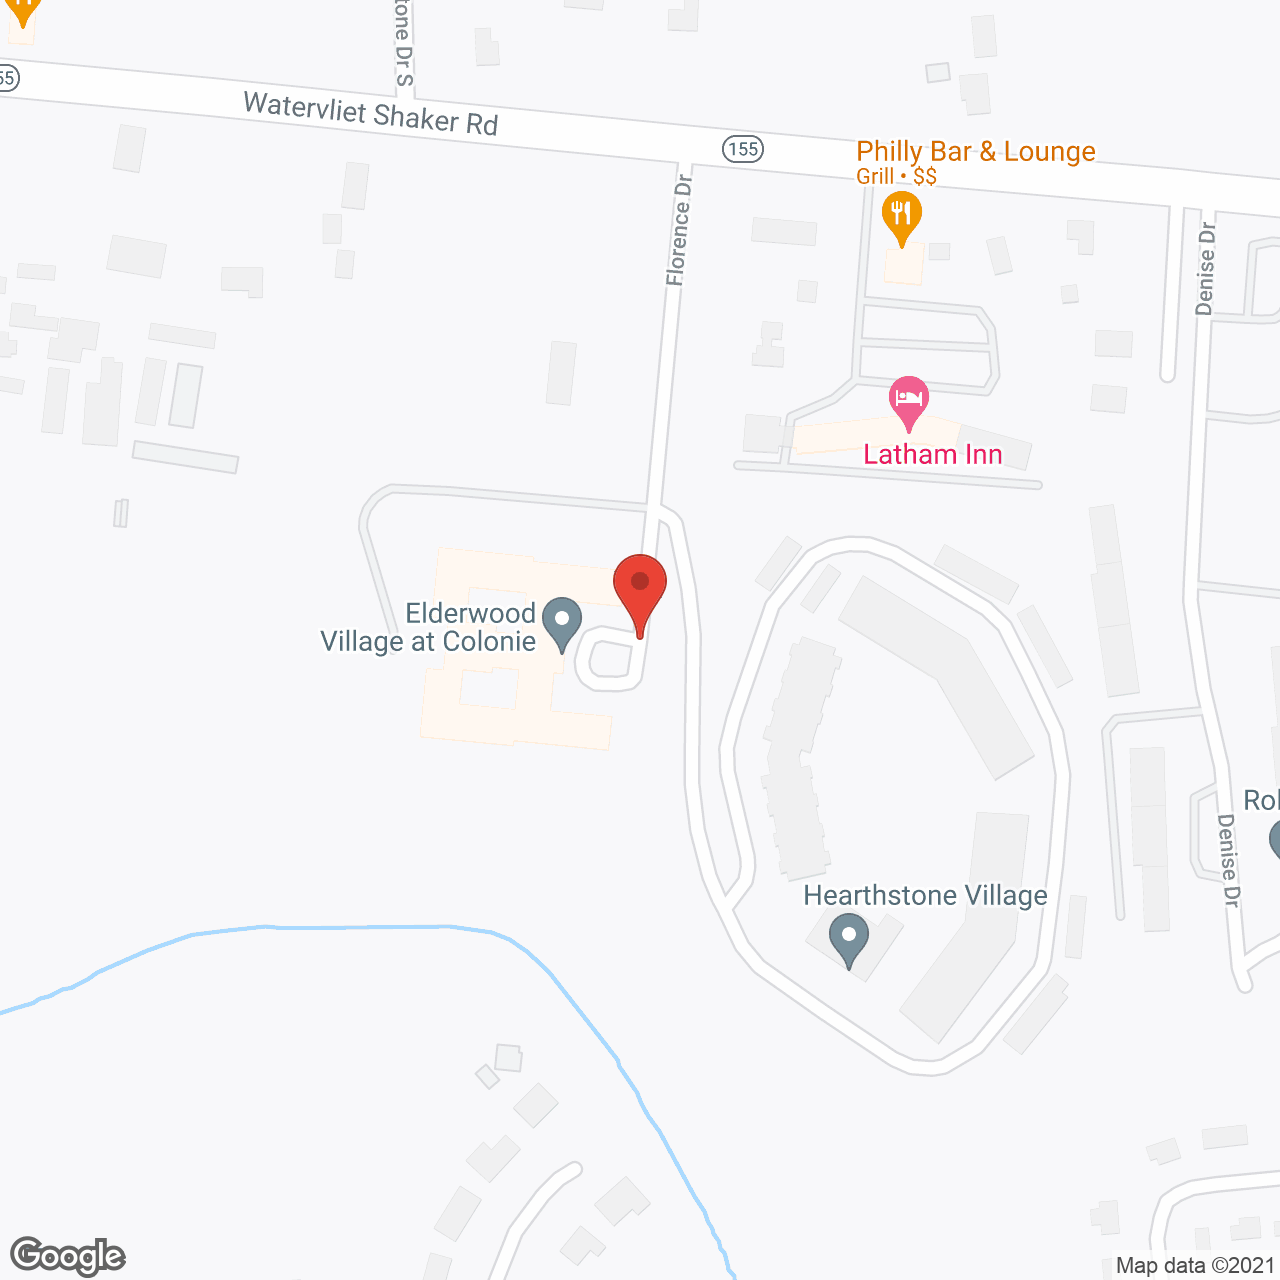 Hearthstone Village in google map